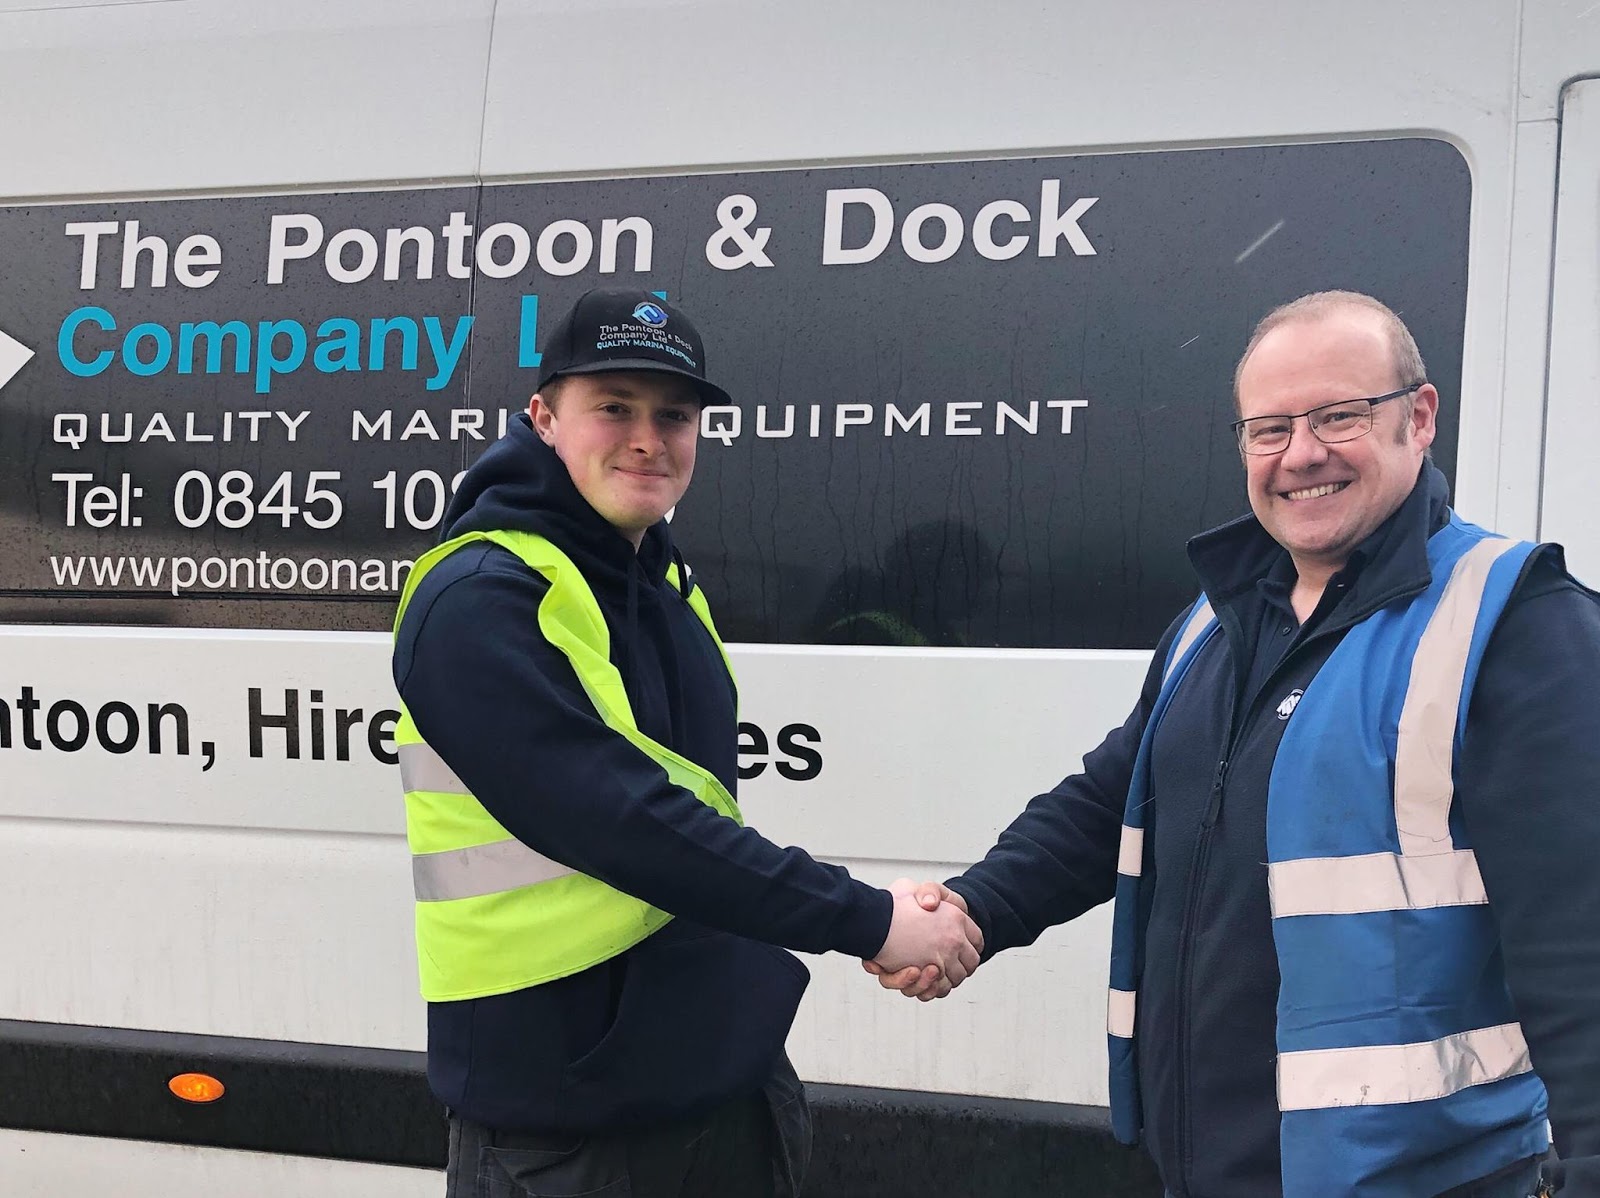 The Pontoon Dock Company Ltd